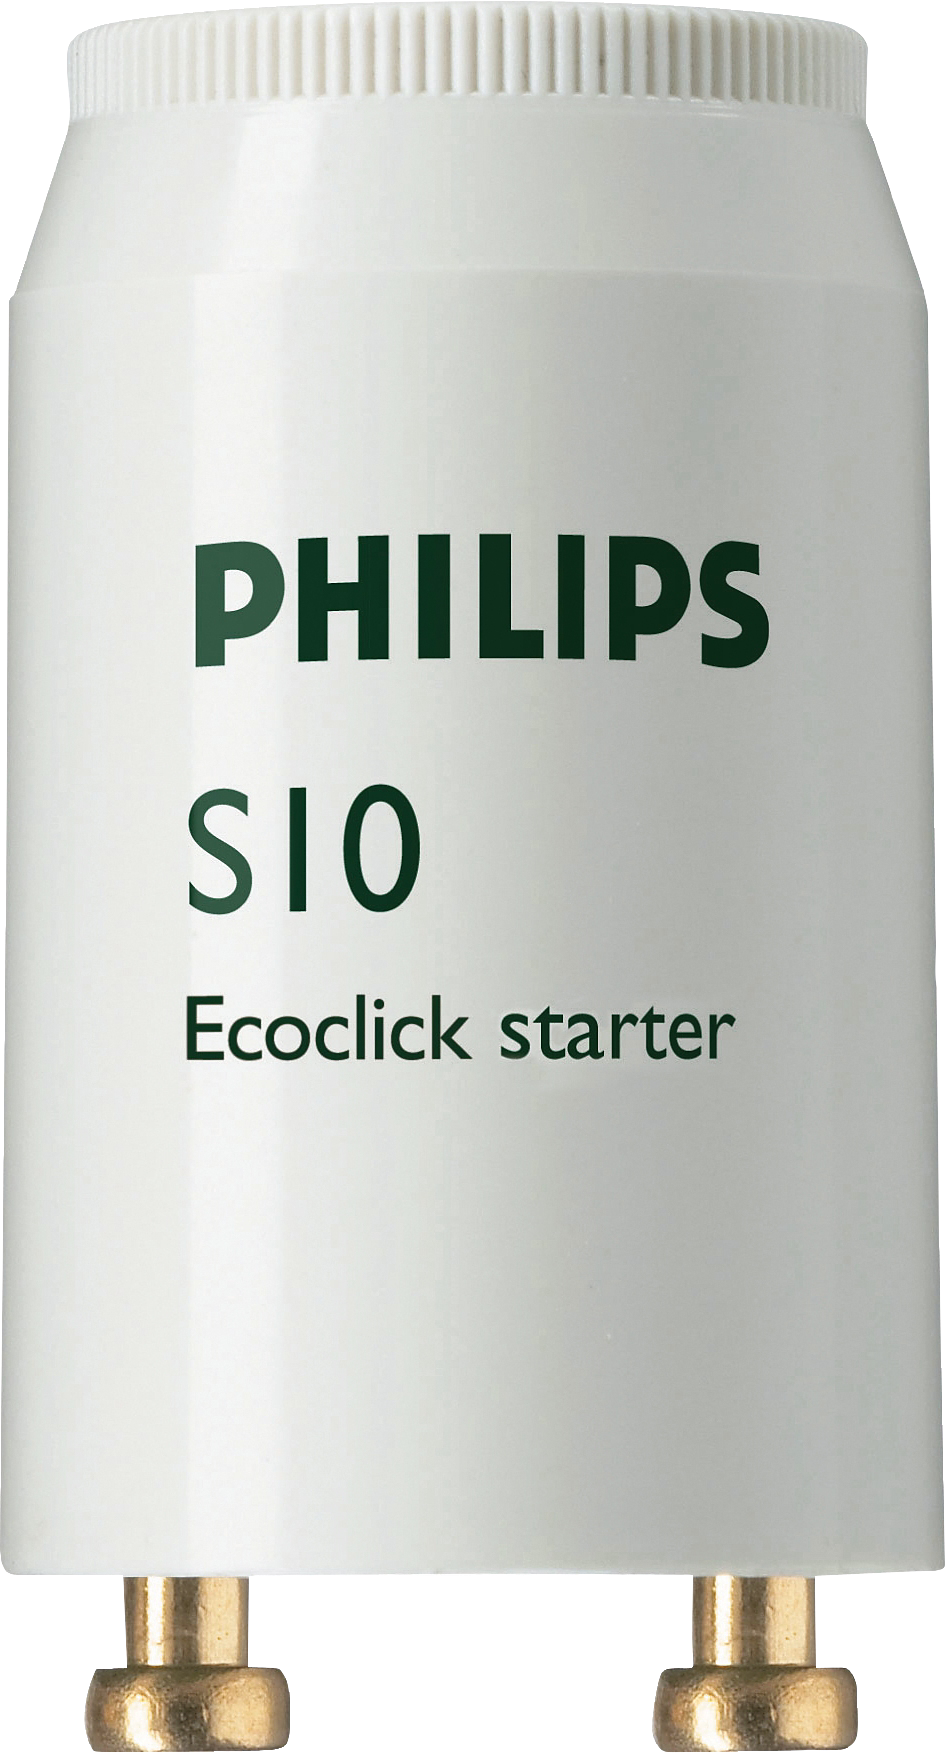 Philips Ecoclick Starter S10 4-65 W 